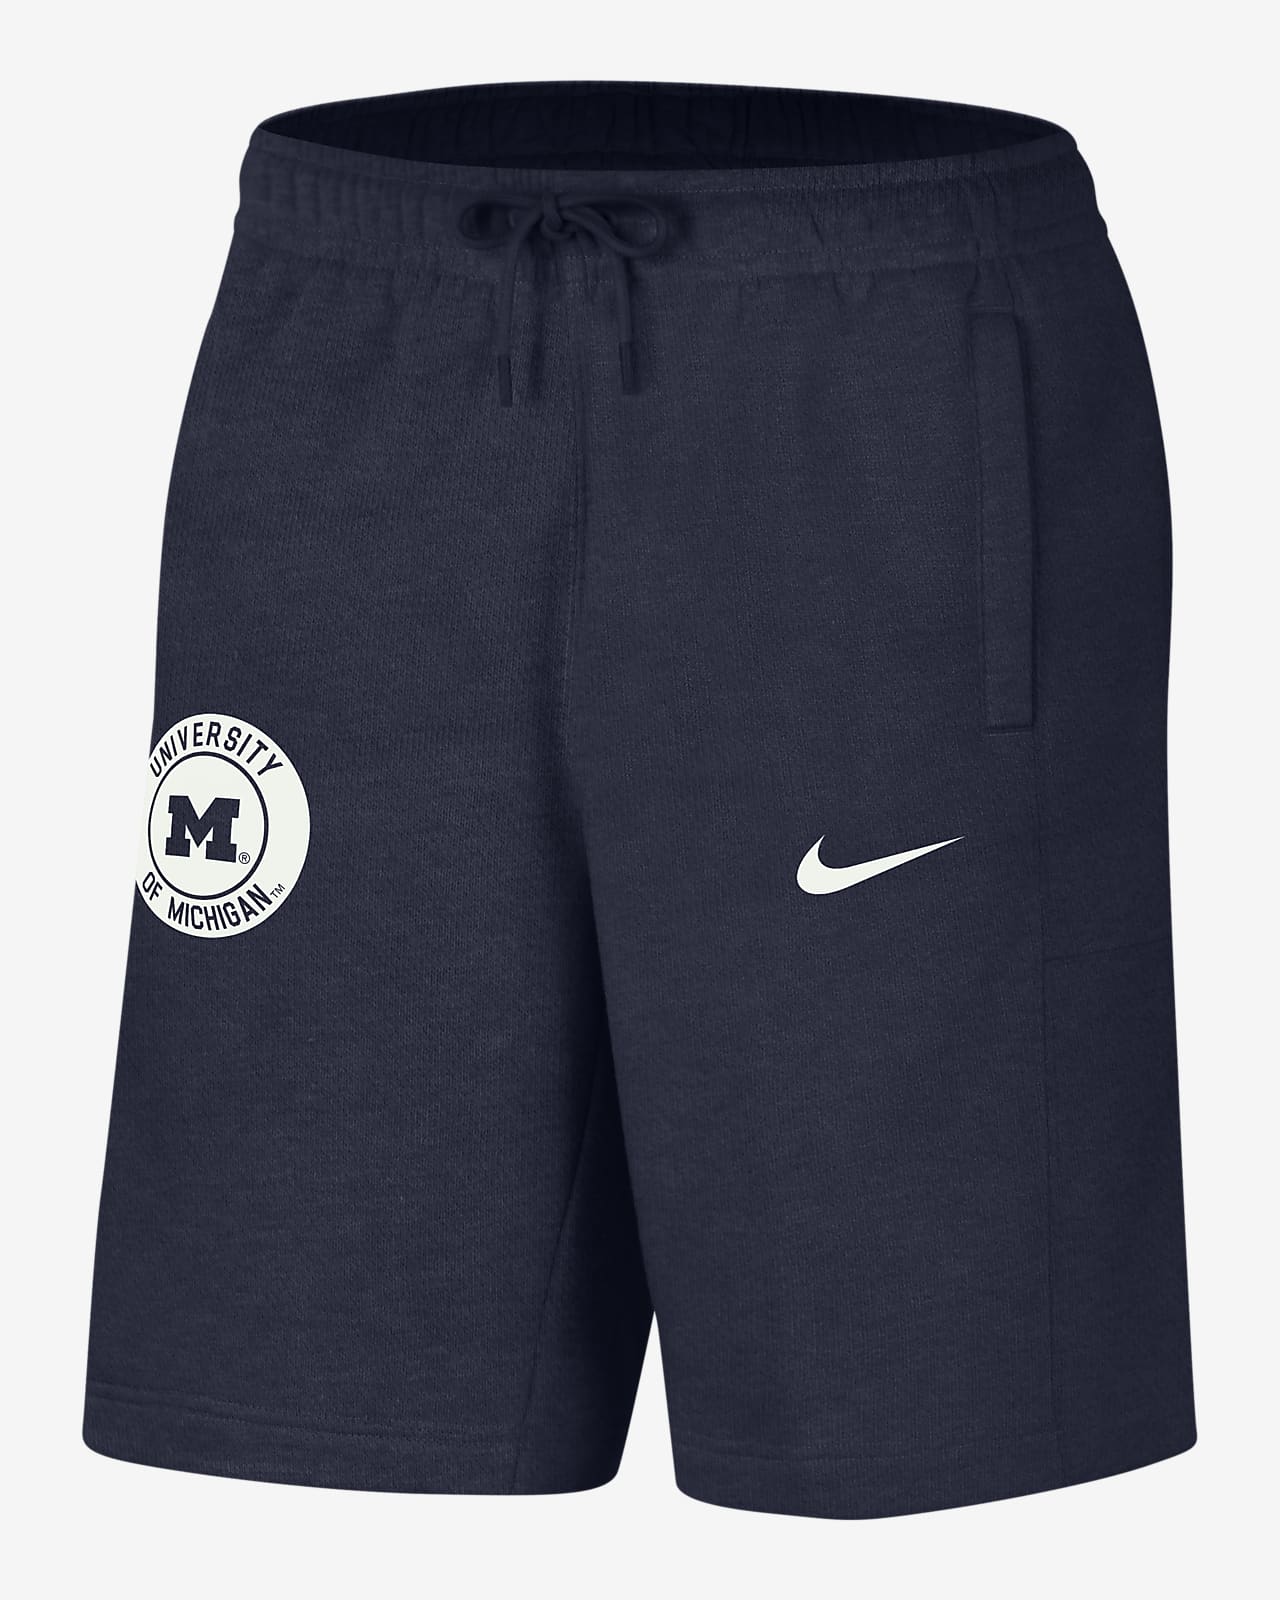 Shorts Nike College para hombre Michigan